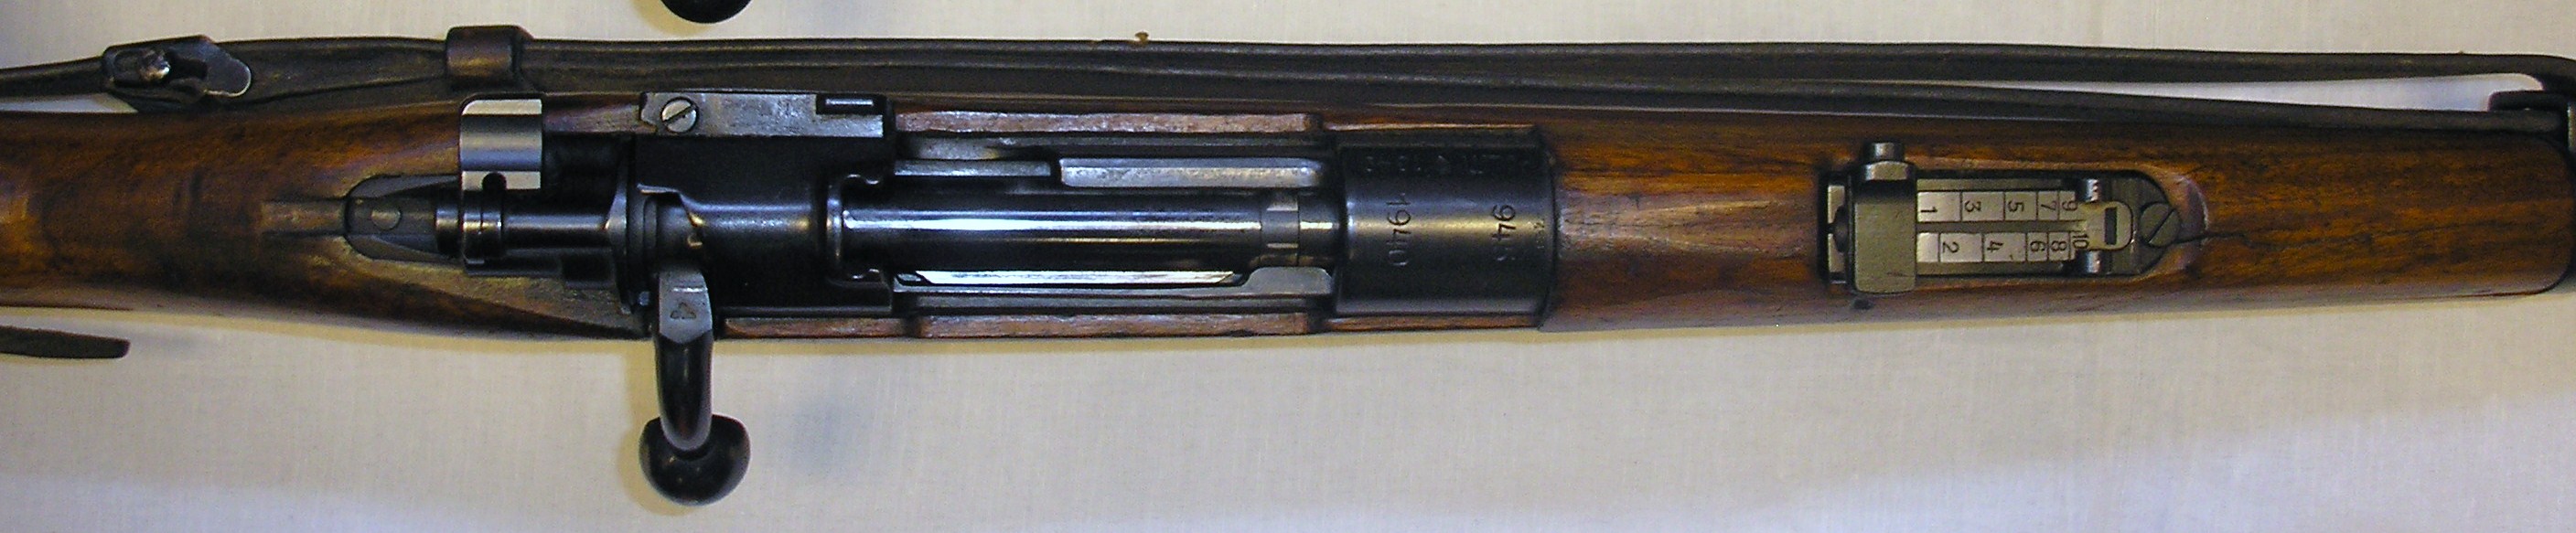 ./guns/rifle/bilder/Rifle-Kongsberg-Mauser-G3340-POLITI-1649-5.JPG